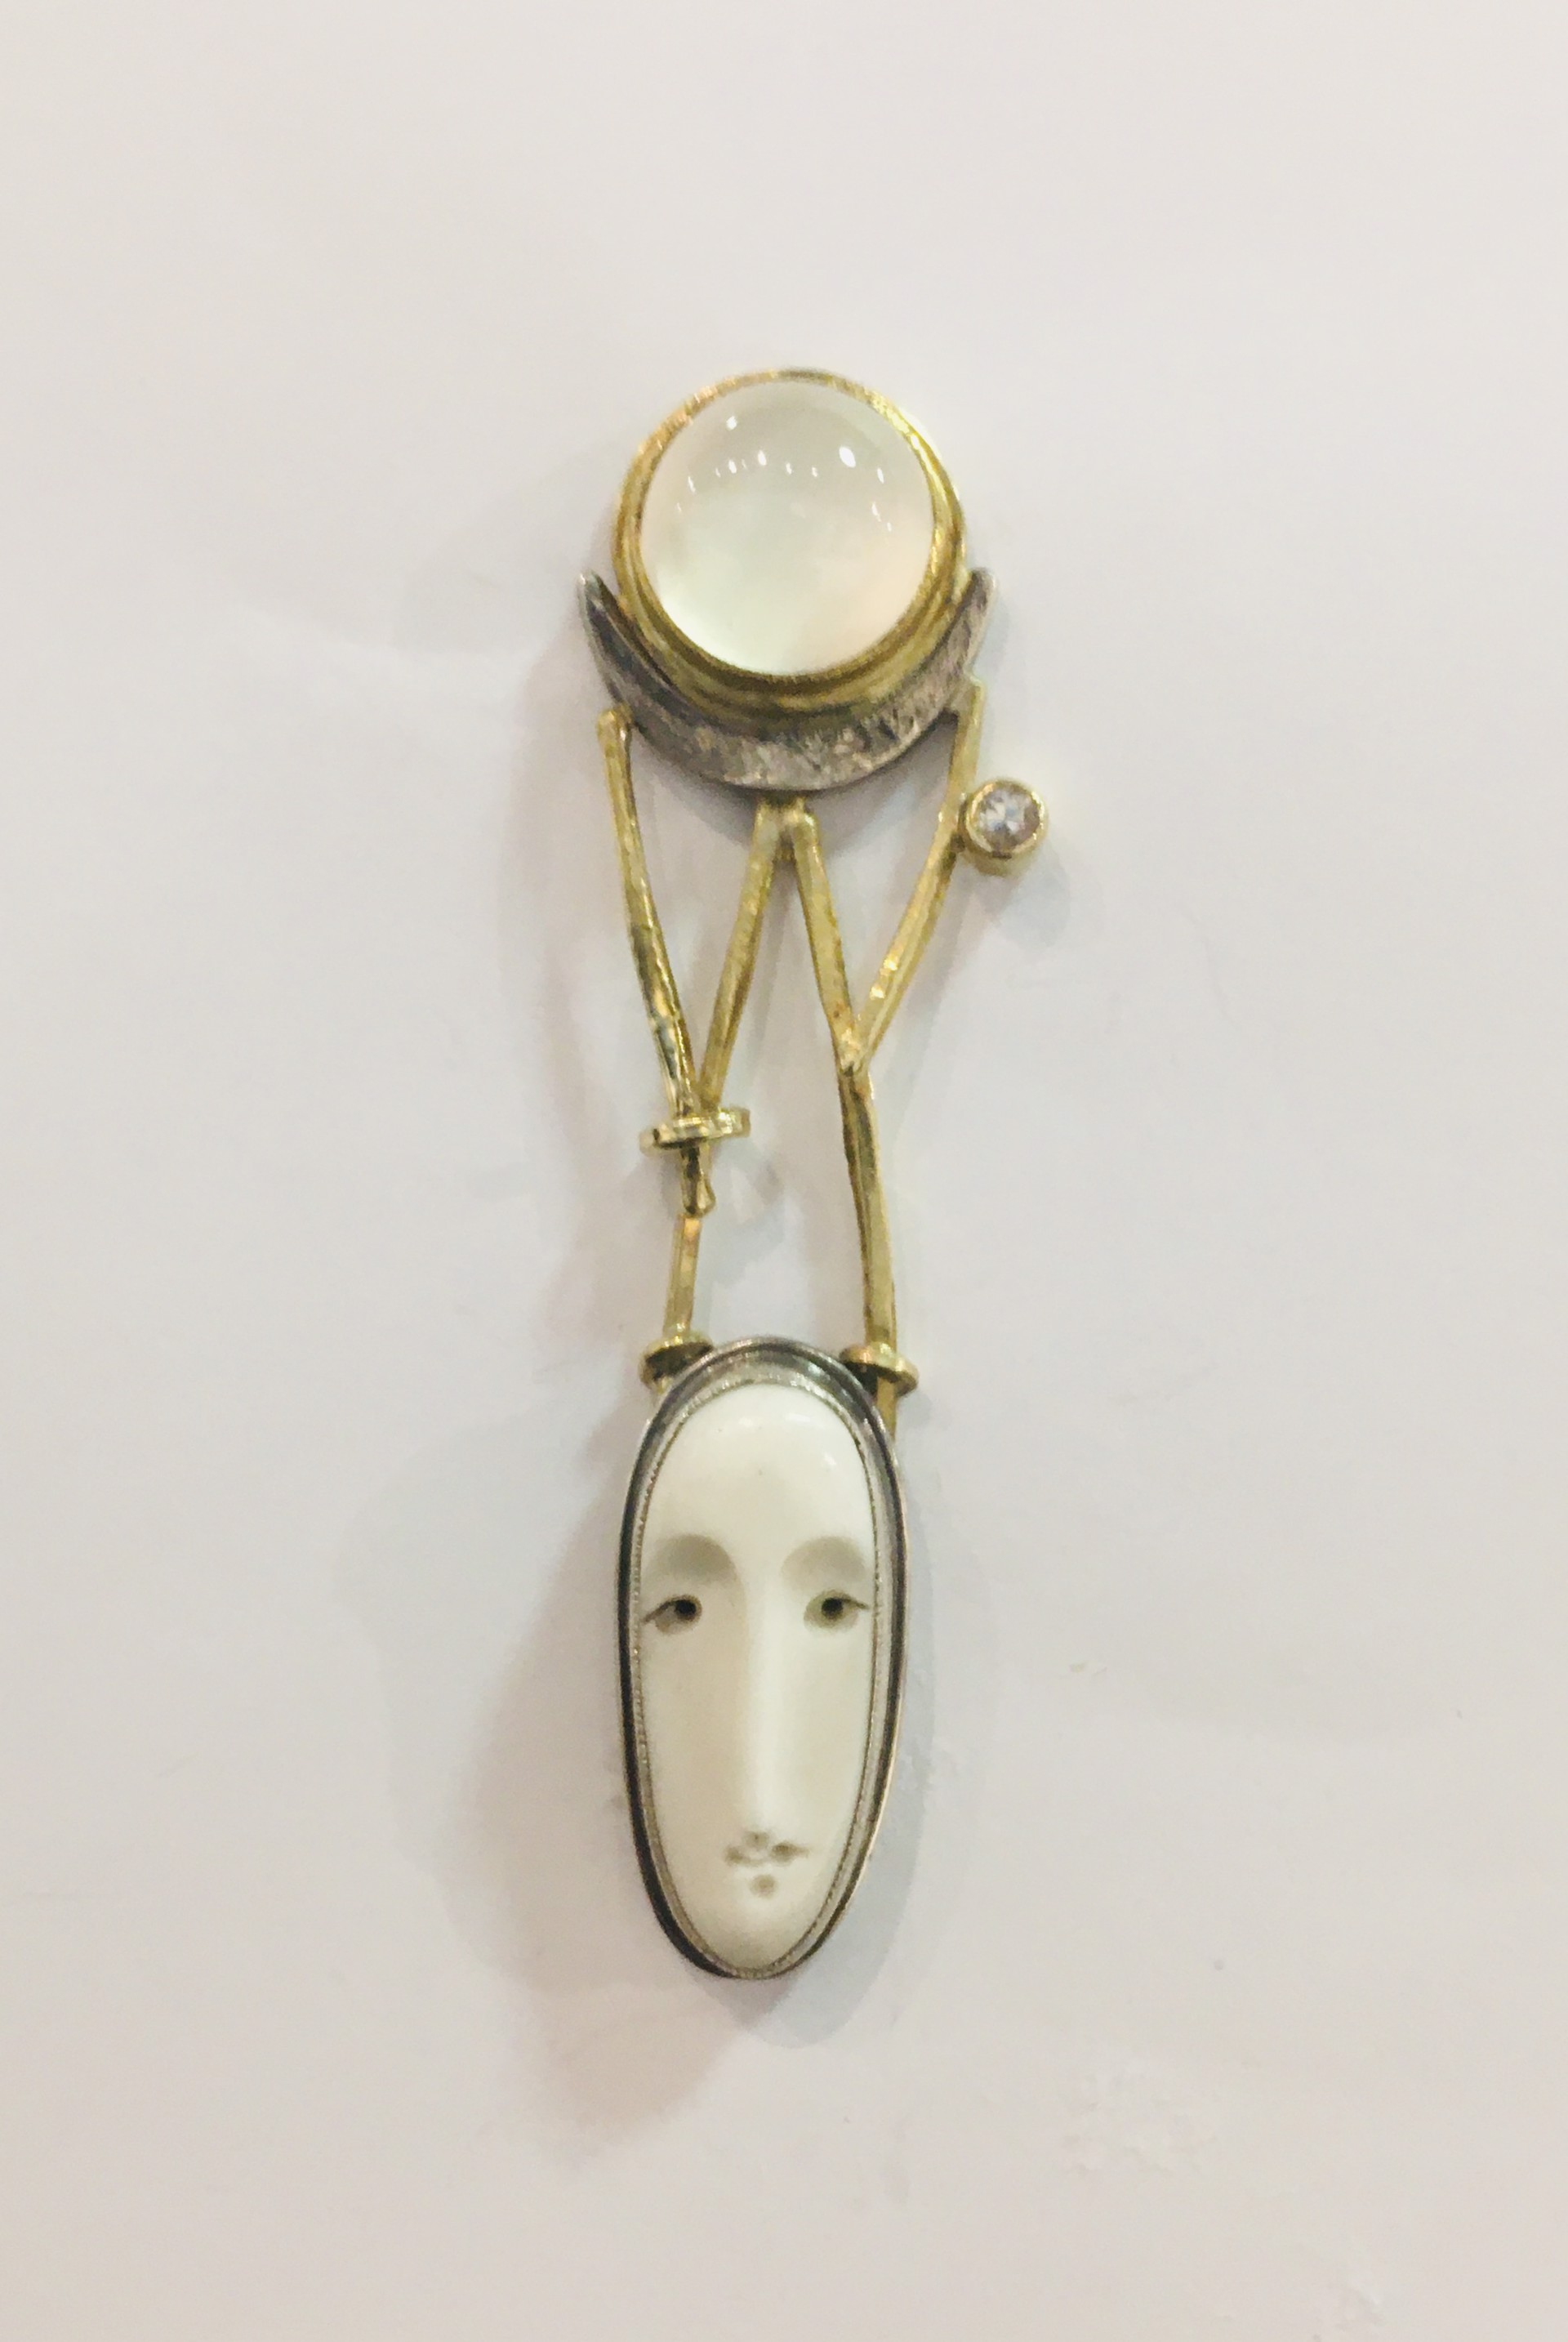 Moon Goddess Pin/Pendant (SOLD) by CAROLYN MORRIS BACH